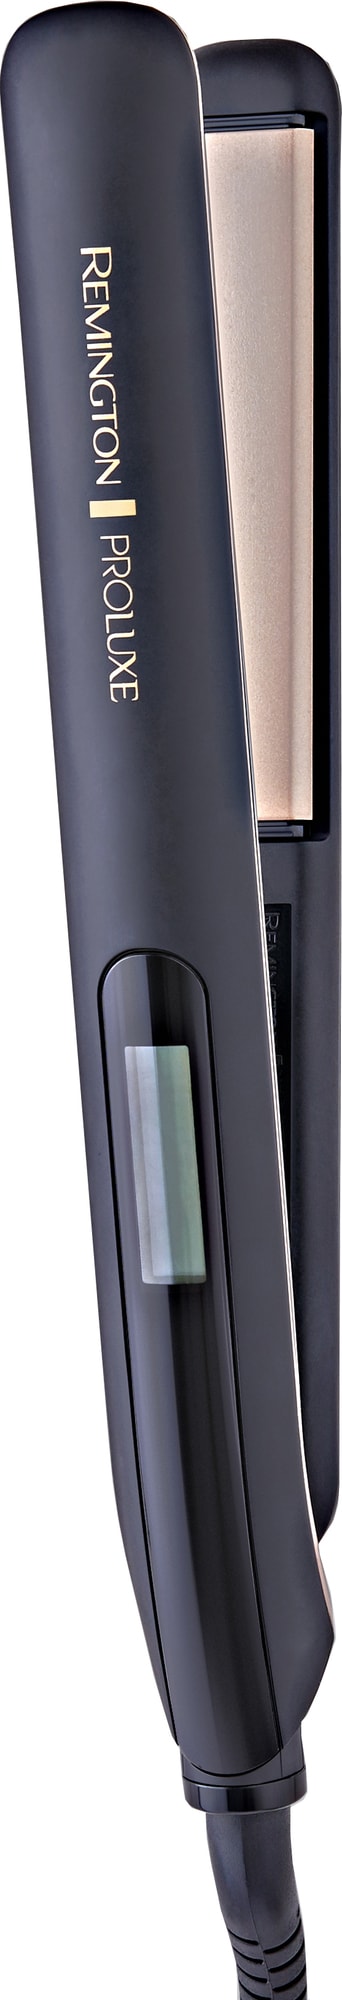 Remington Proluxe Midnight Edition glattejern S9100B | Elgiganten